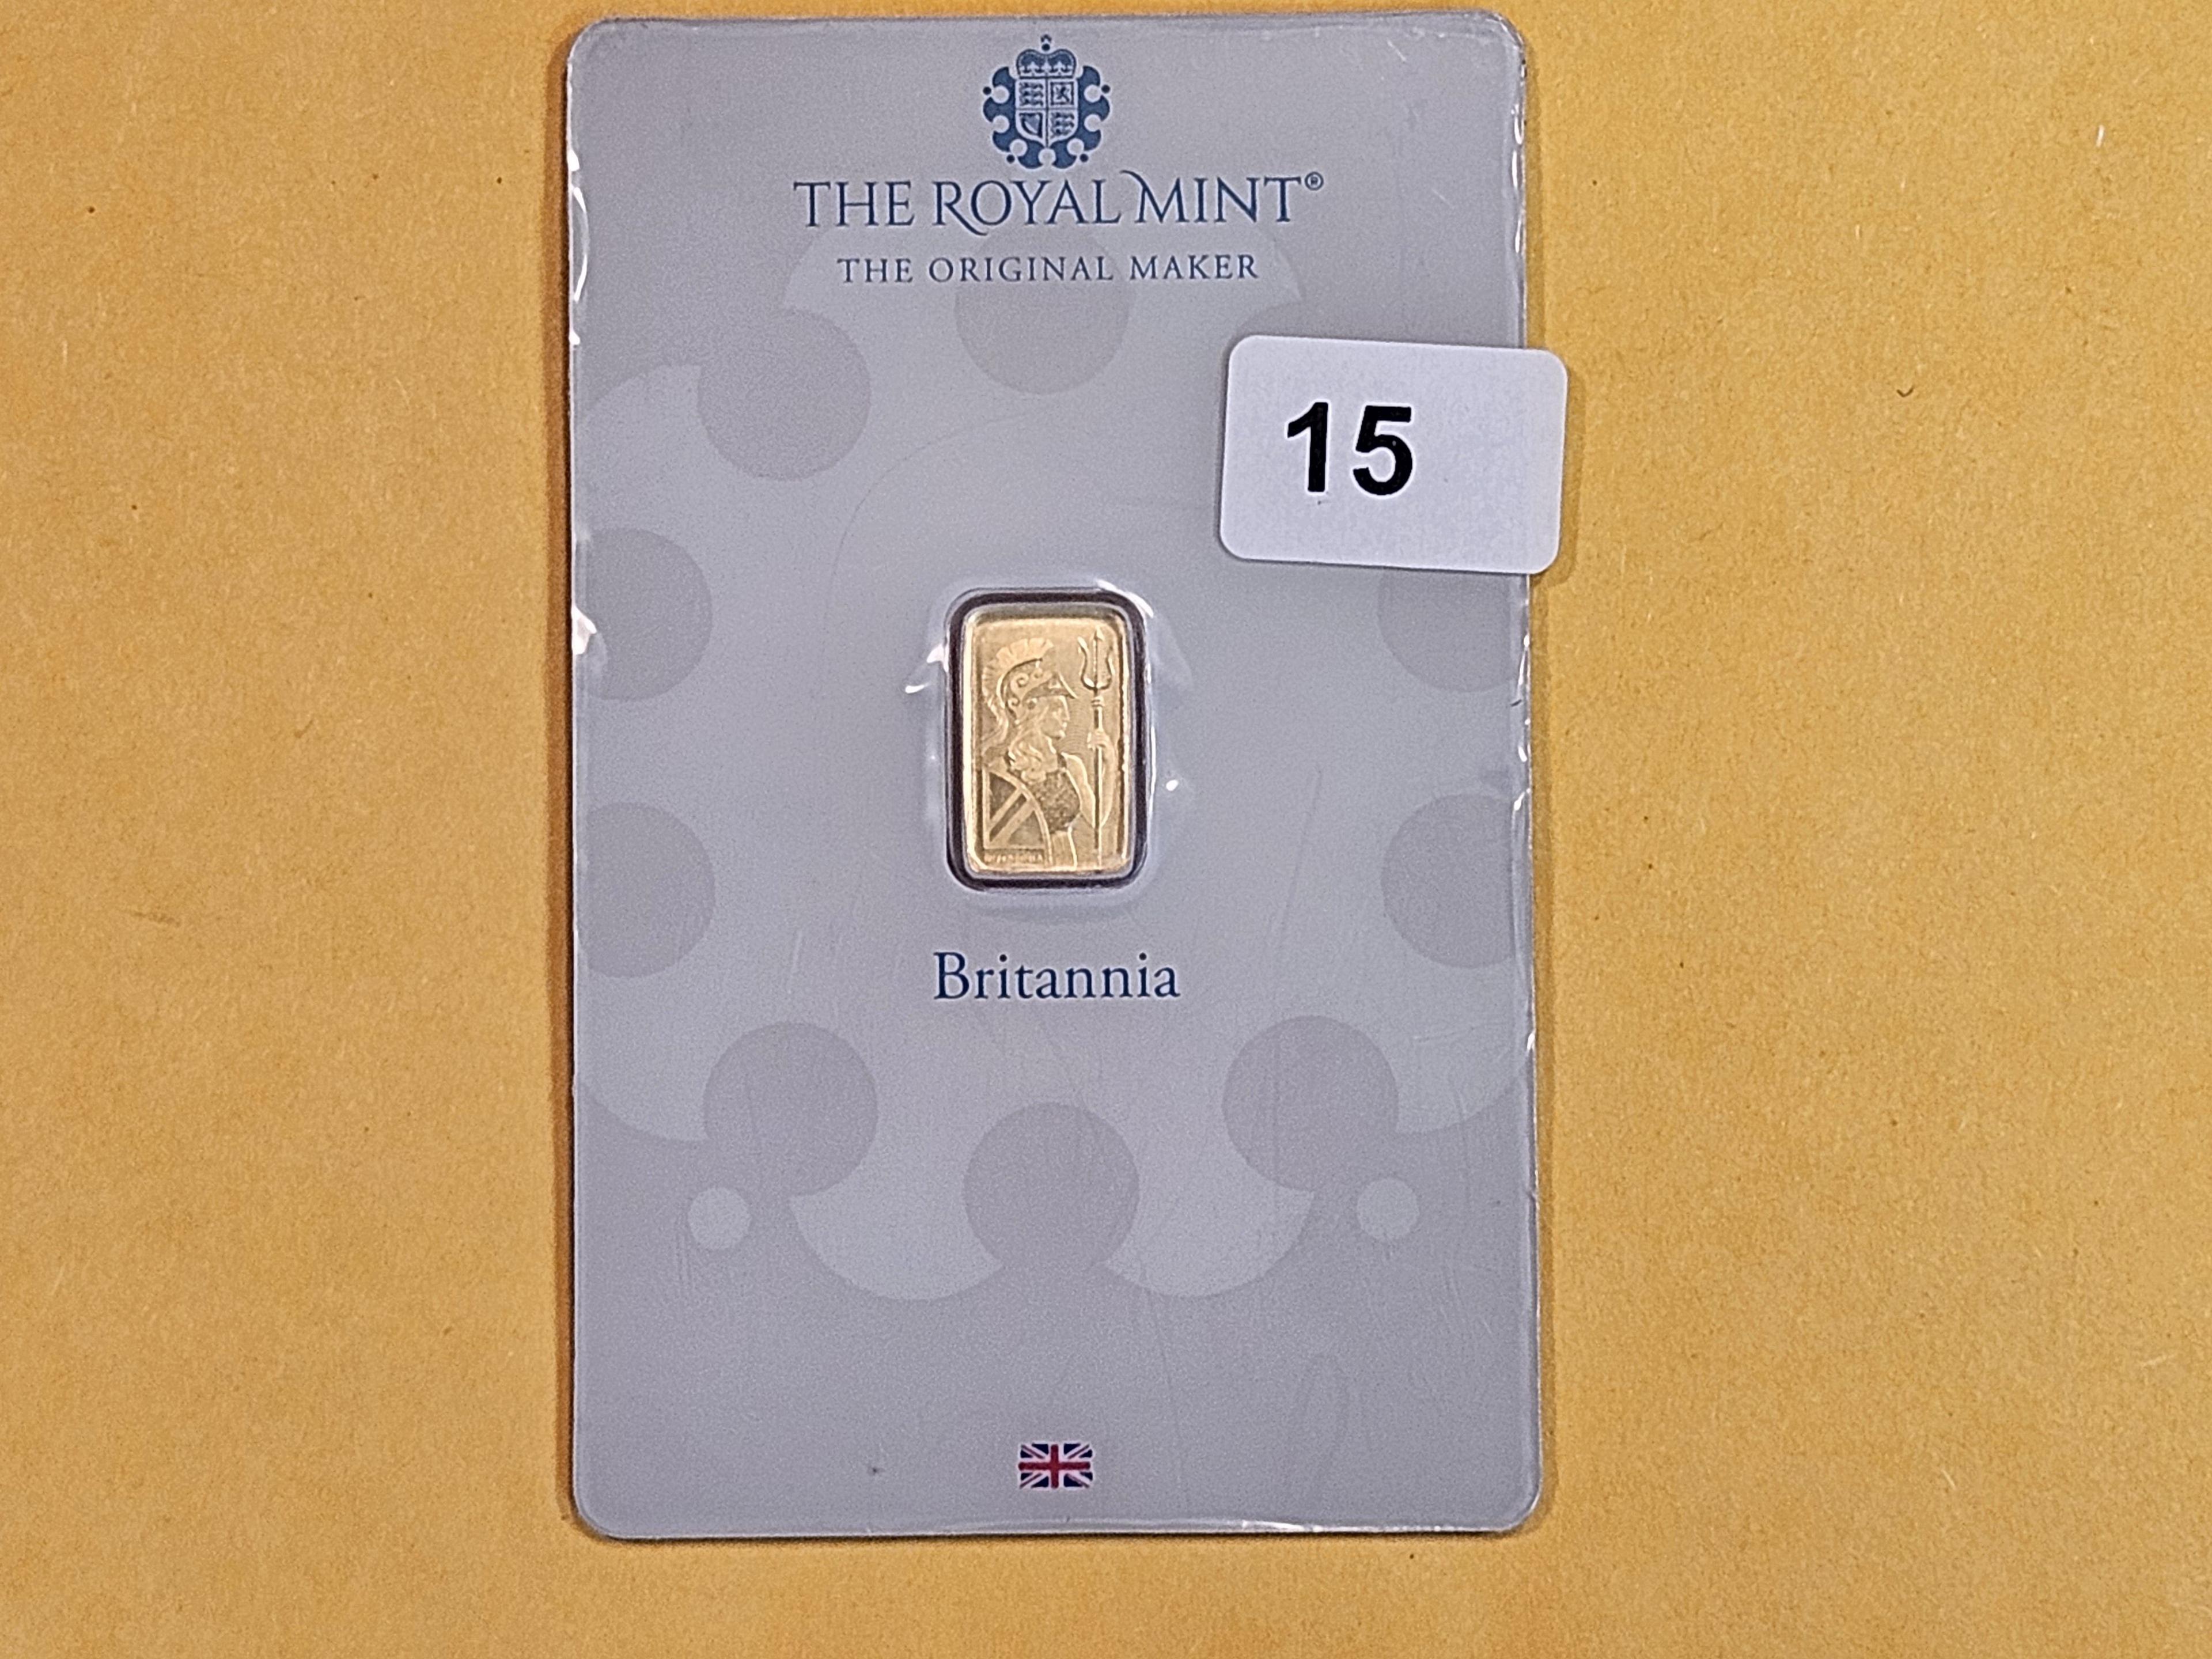 GOLD! The Royal Mint one gram .9999 fine gold bar